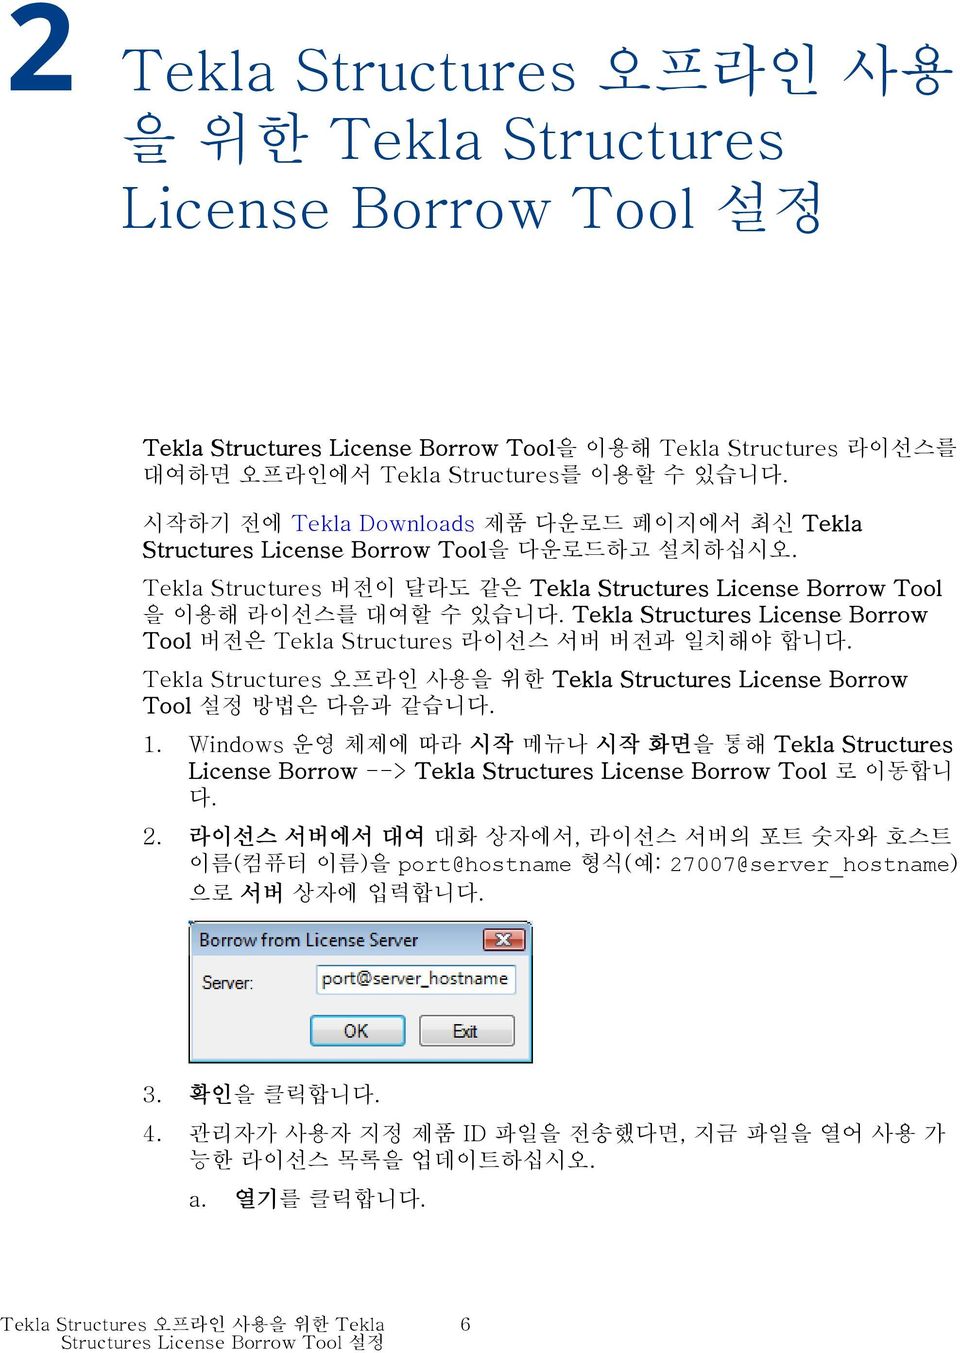 Tekla Structures License Borrow Tool 버전은 Tekla Structures 라이선스 서버 버전과 일치해야 합니다. Tekla Structures 오프라인 사용을 위한 Tekla Structures License Borrow Tool 설정 방법은 다음과 같습니다. 1.